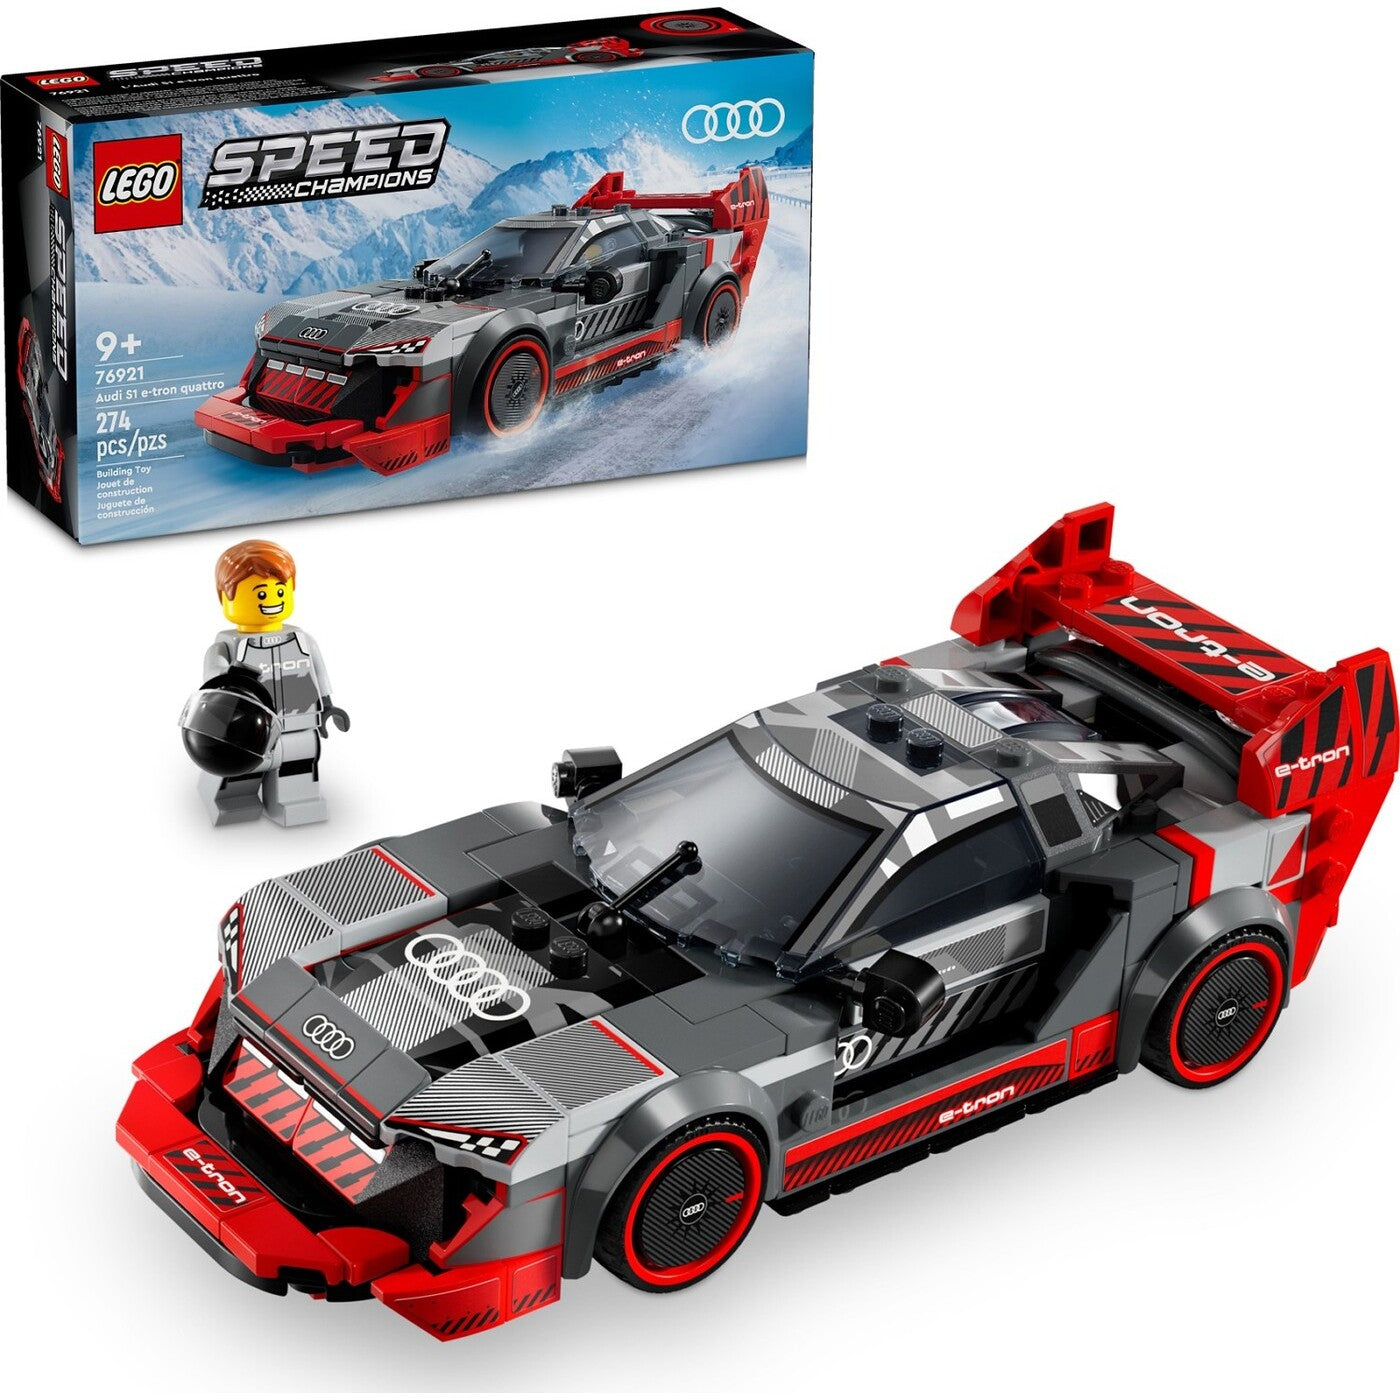 Lego Speed Audi S1 E-Tron Quattrro - 76921